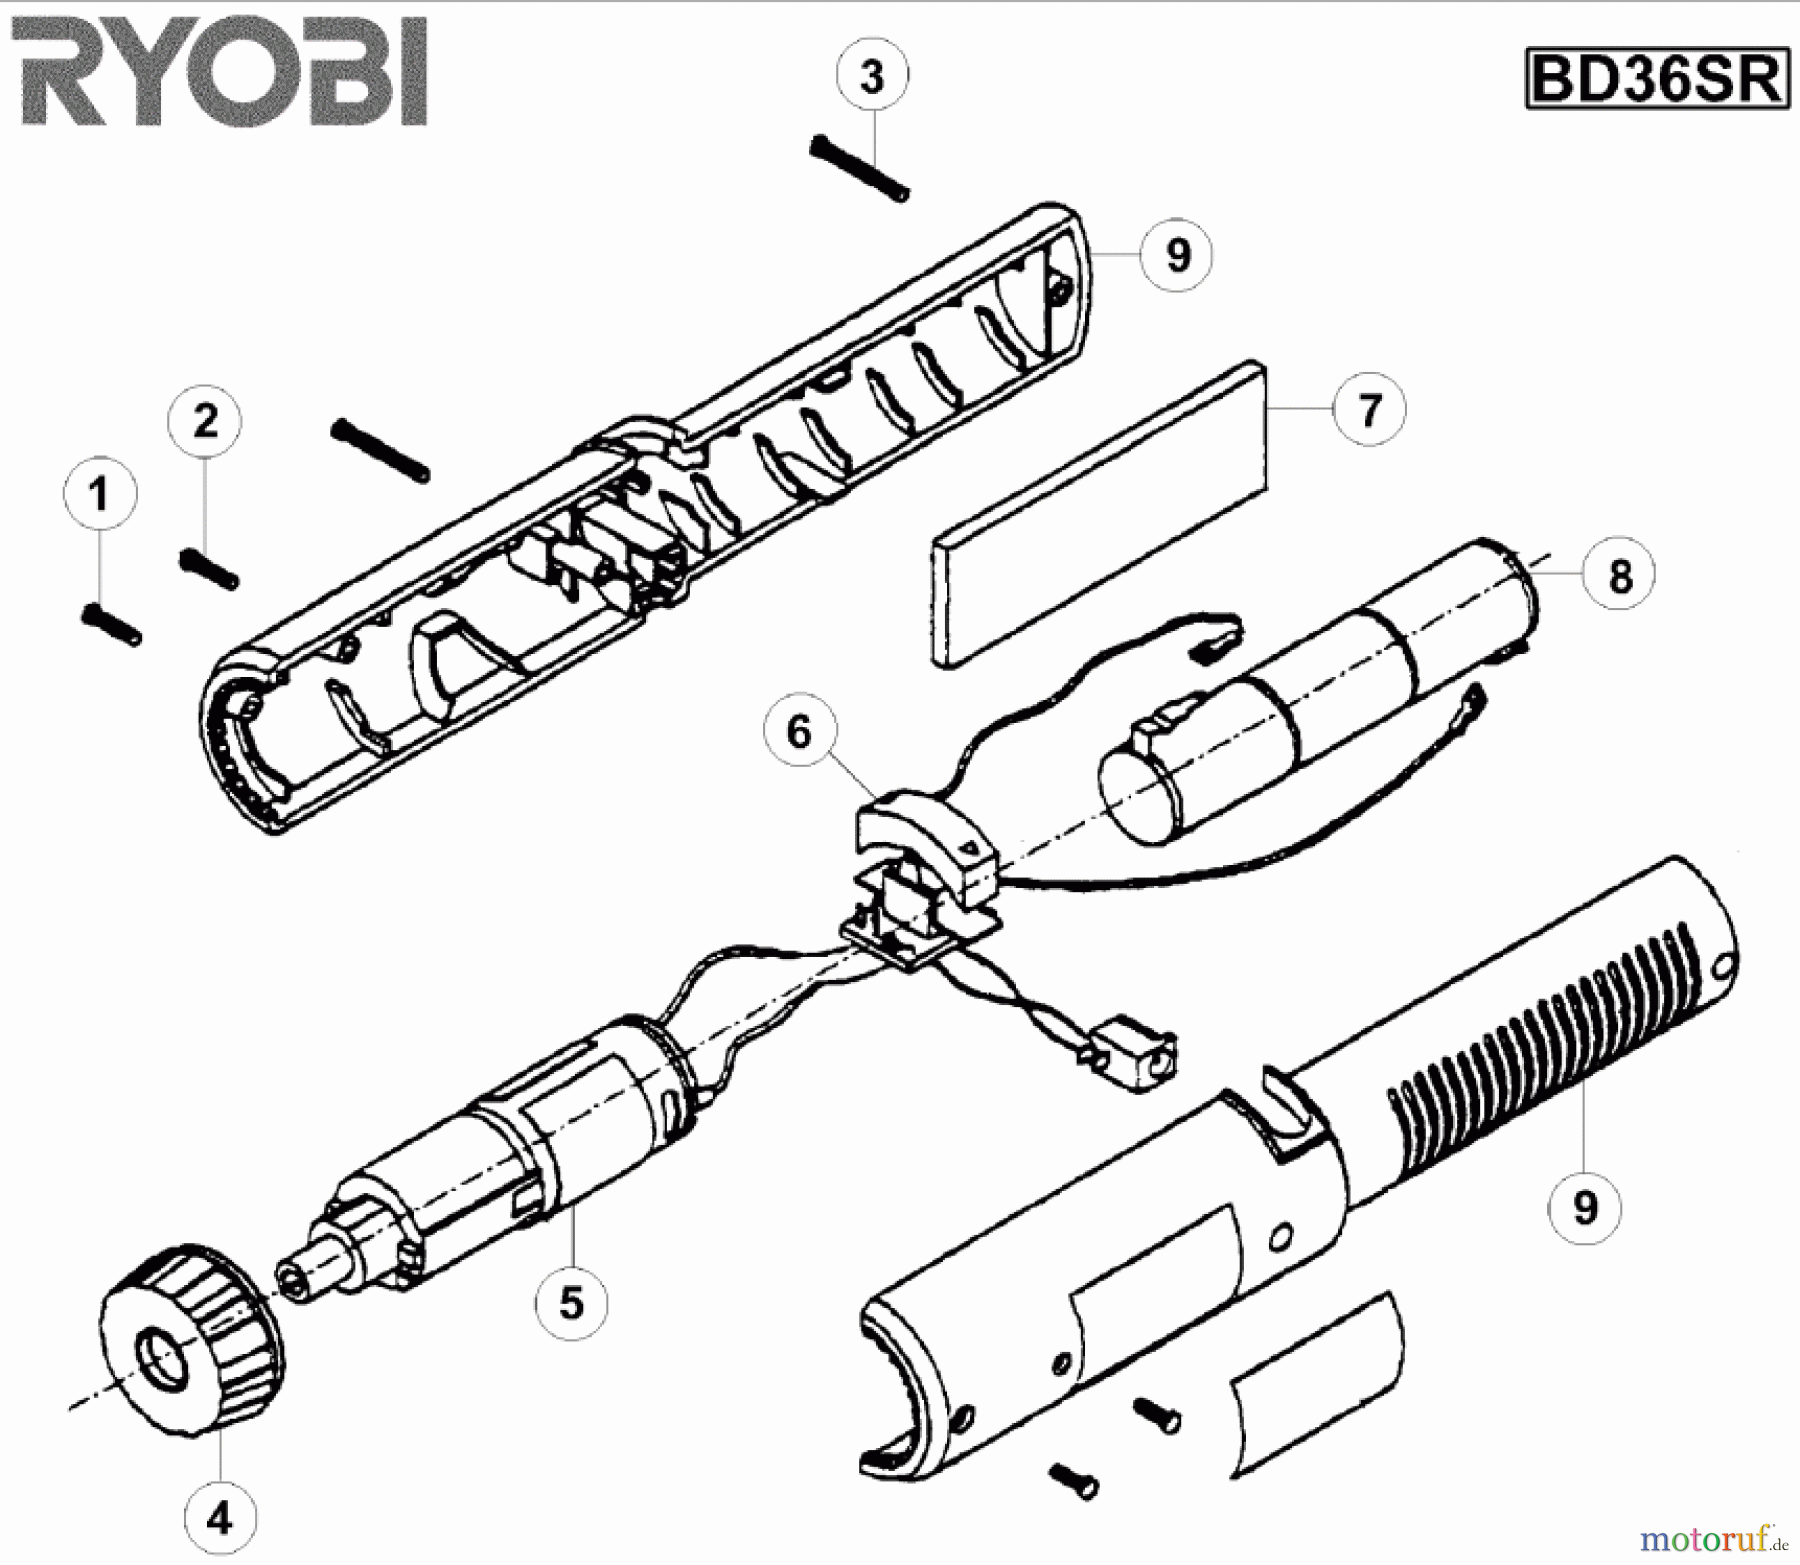  Ryobi (Schlag-)Bohrschrauber Akkuschrauber BD36SR